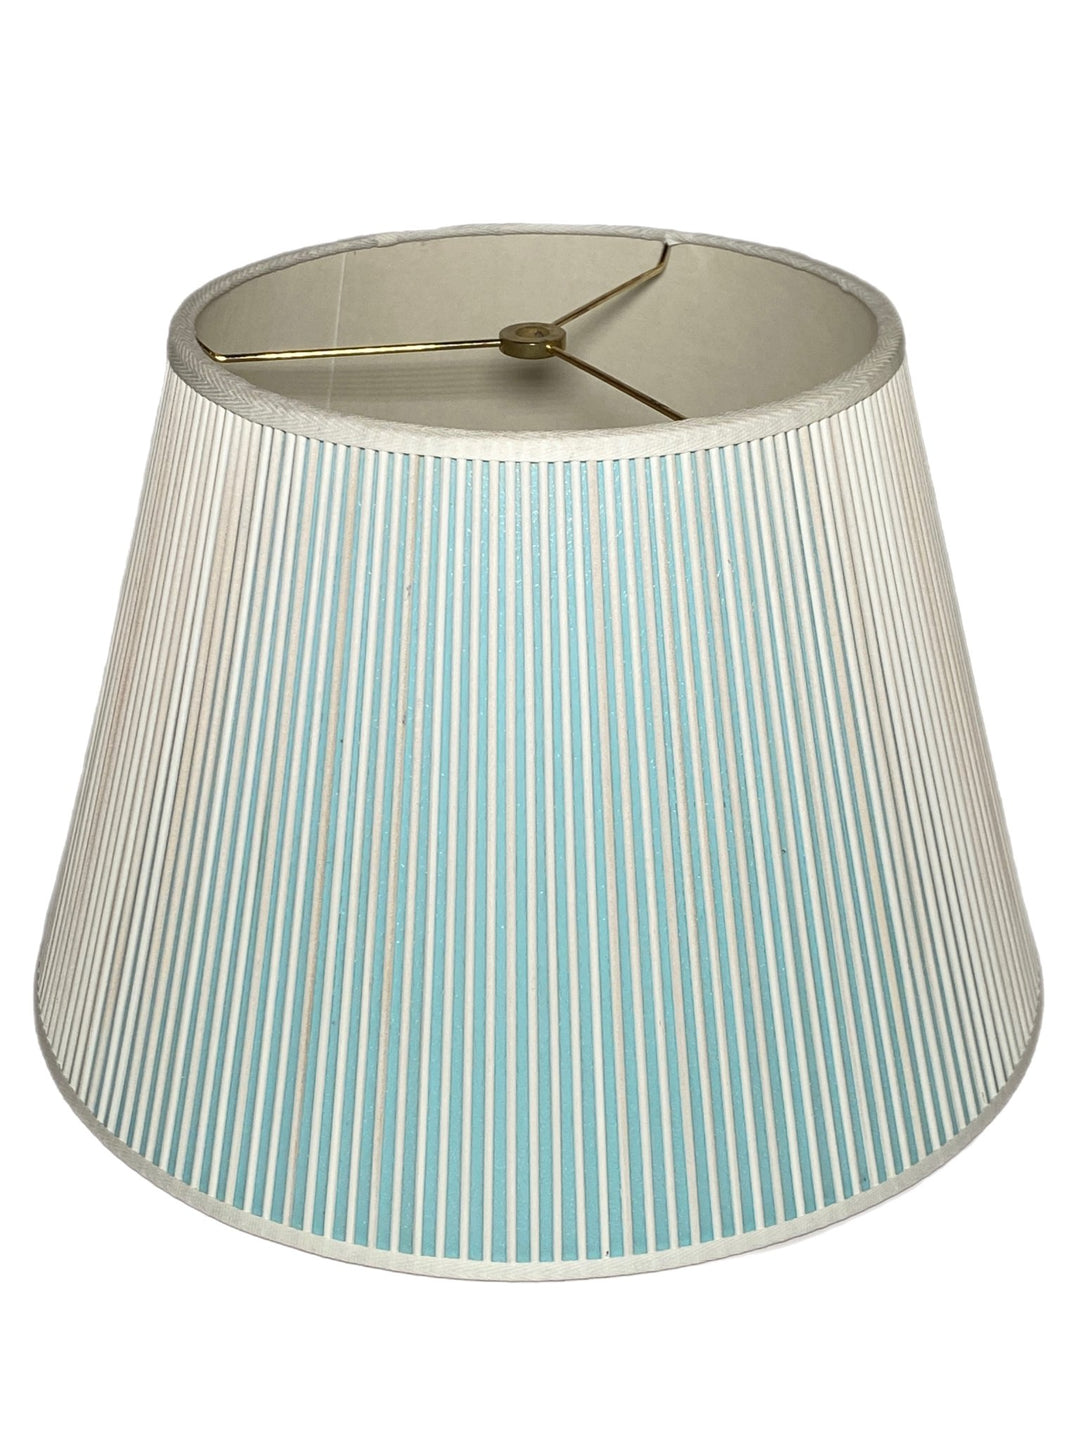 New Coastal British Empire Stick Lamp Shade - White Washed Sticks + Aqua Paper - Lux Lamp Shades